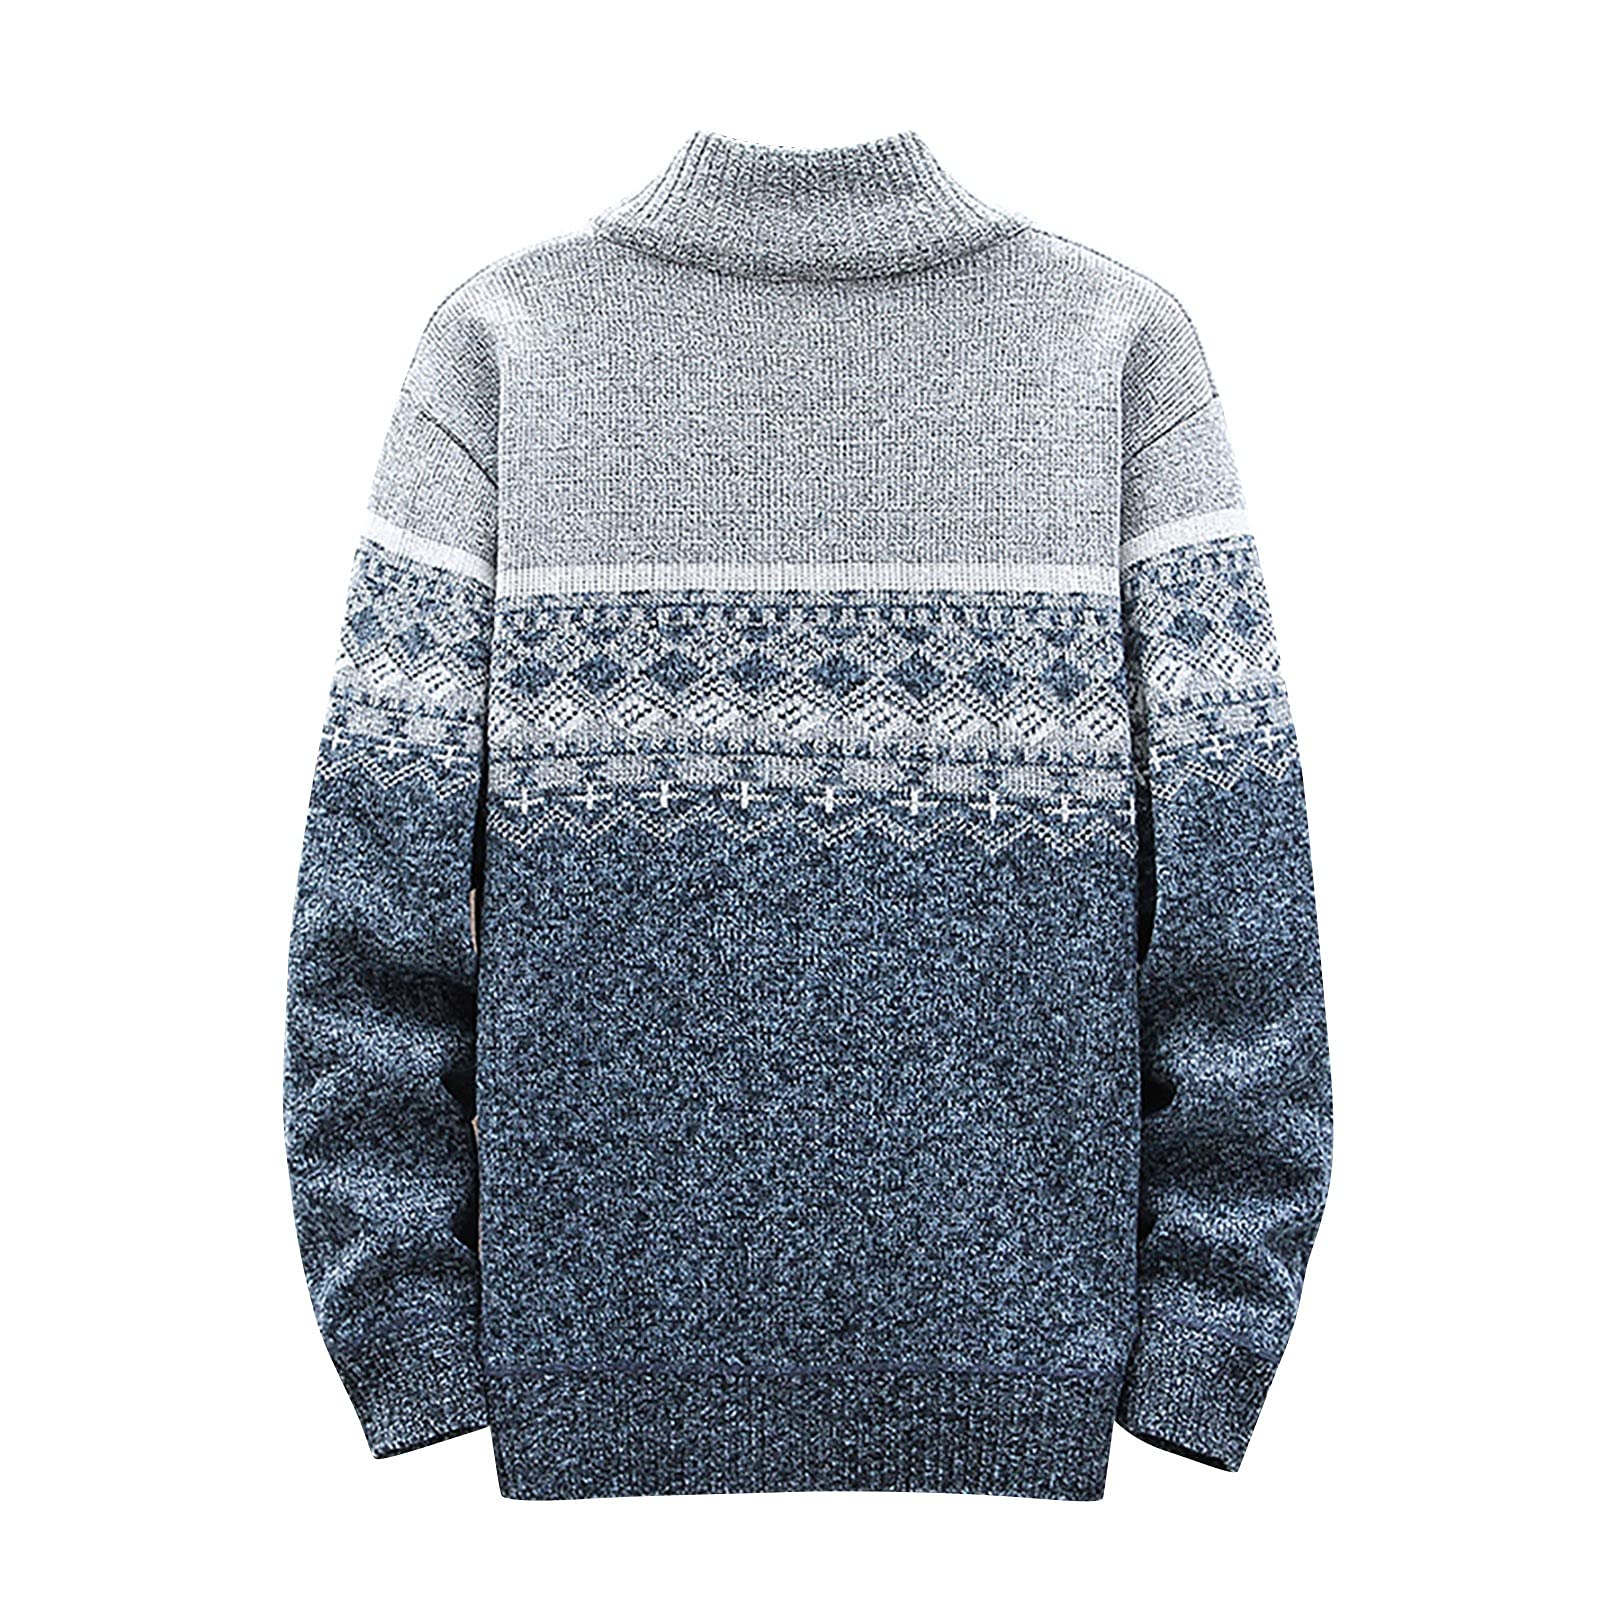 Knit Hoodies For Men Cardigan Sweaters Full Zip Hooded Sweatshirts Fleece Lined Sweater Jackets With Pockets